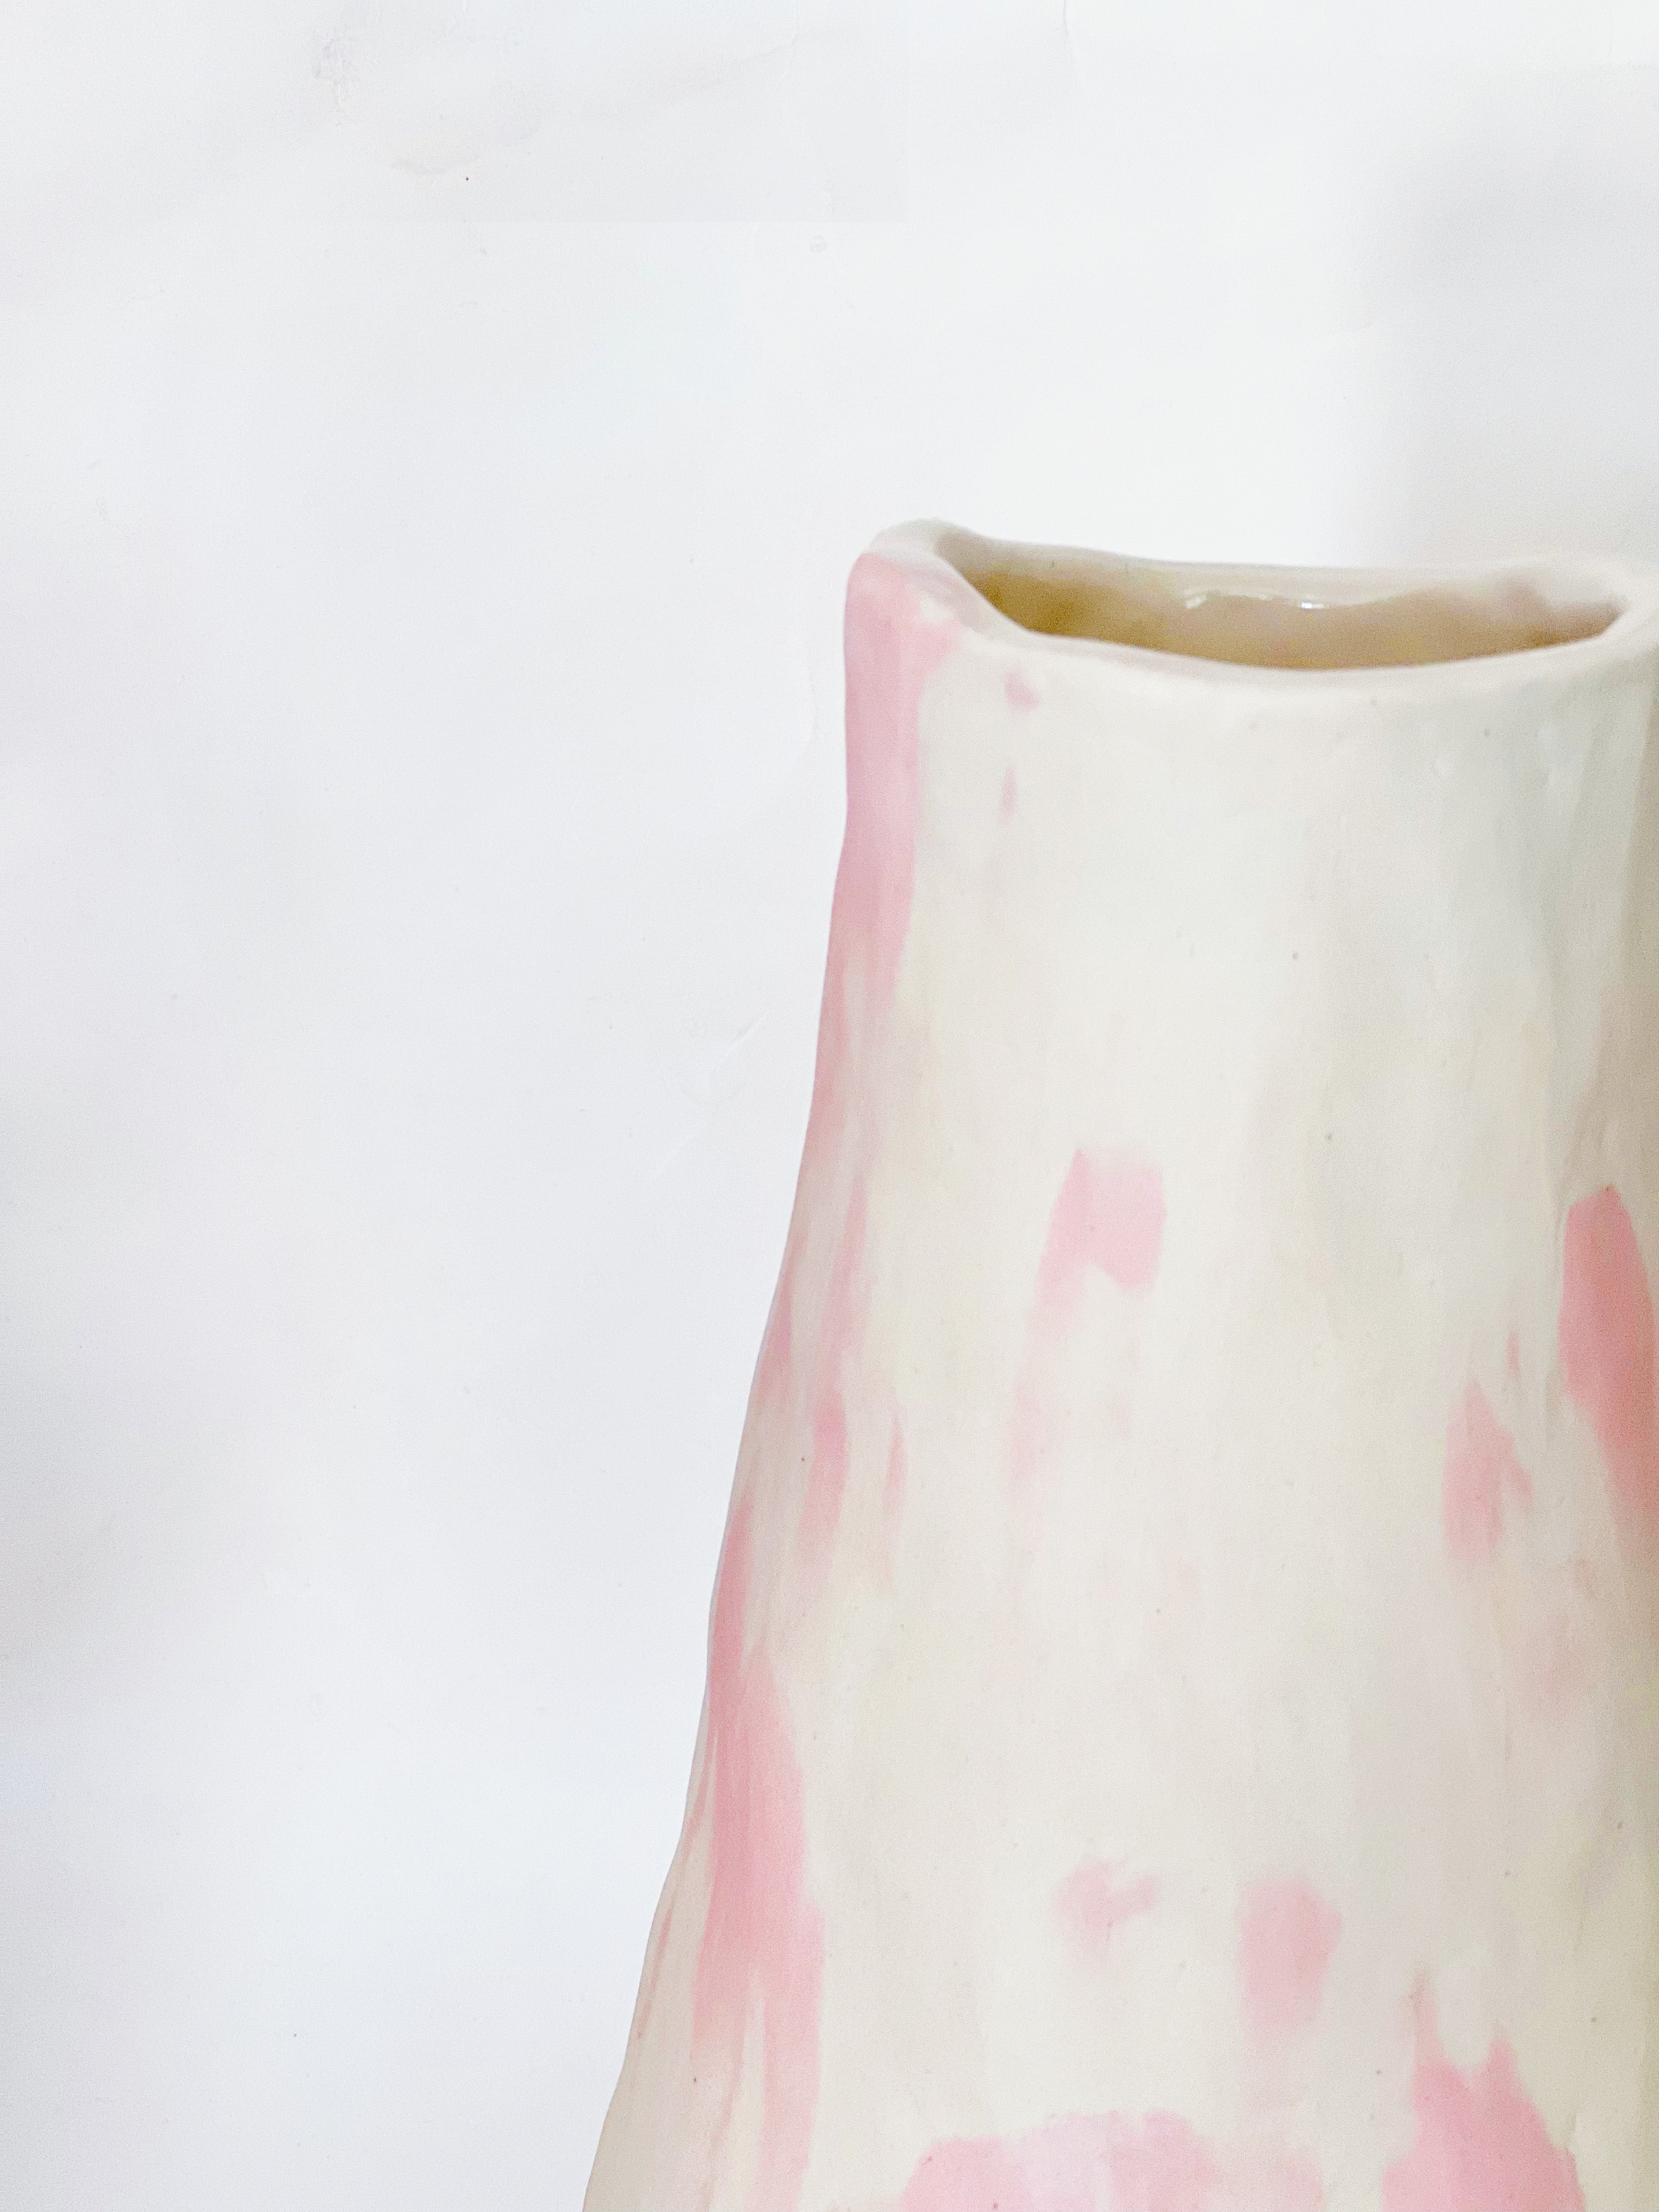 Ready to ship: Pink on Cream Bud Vase